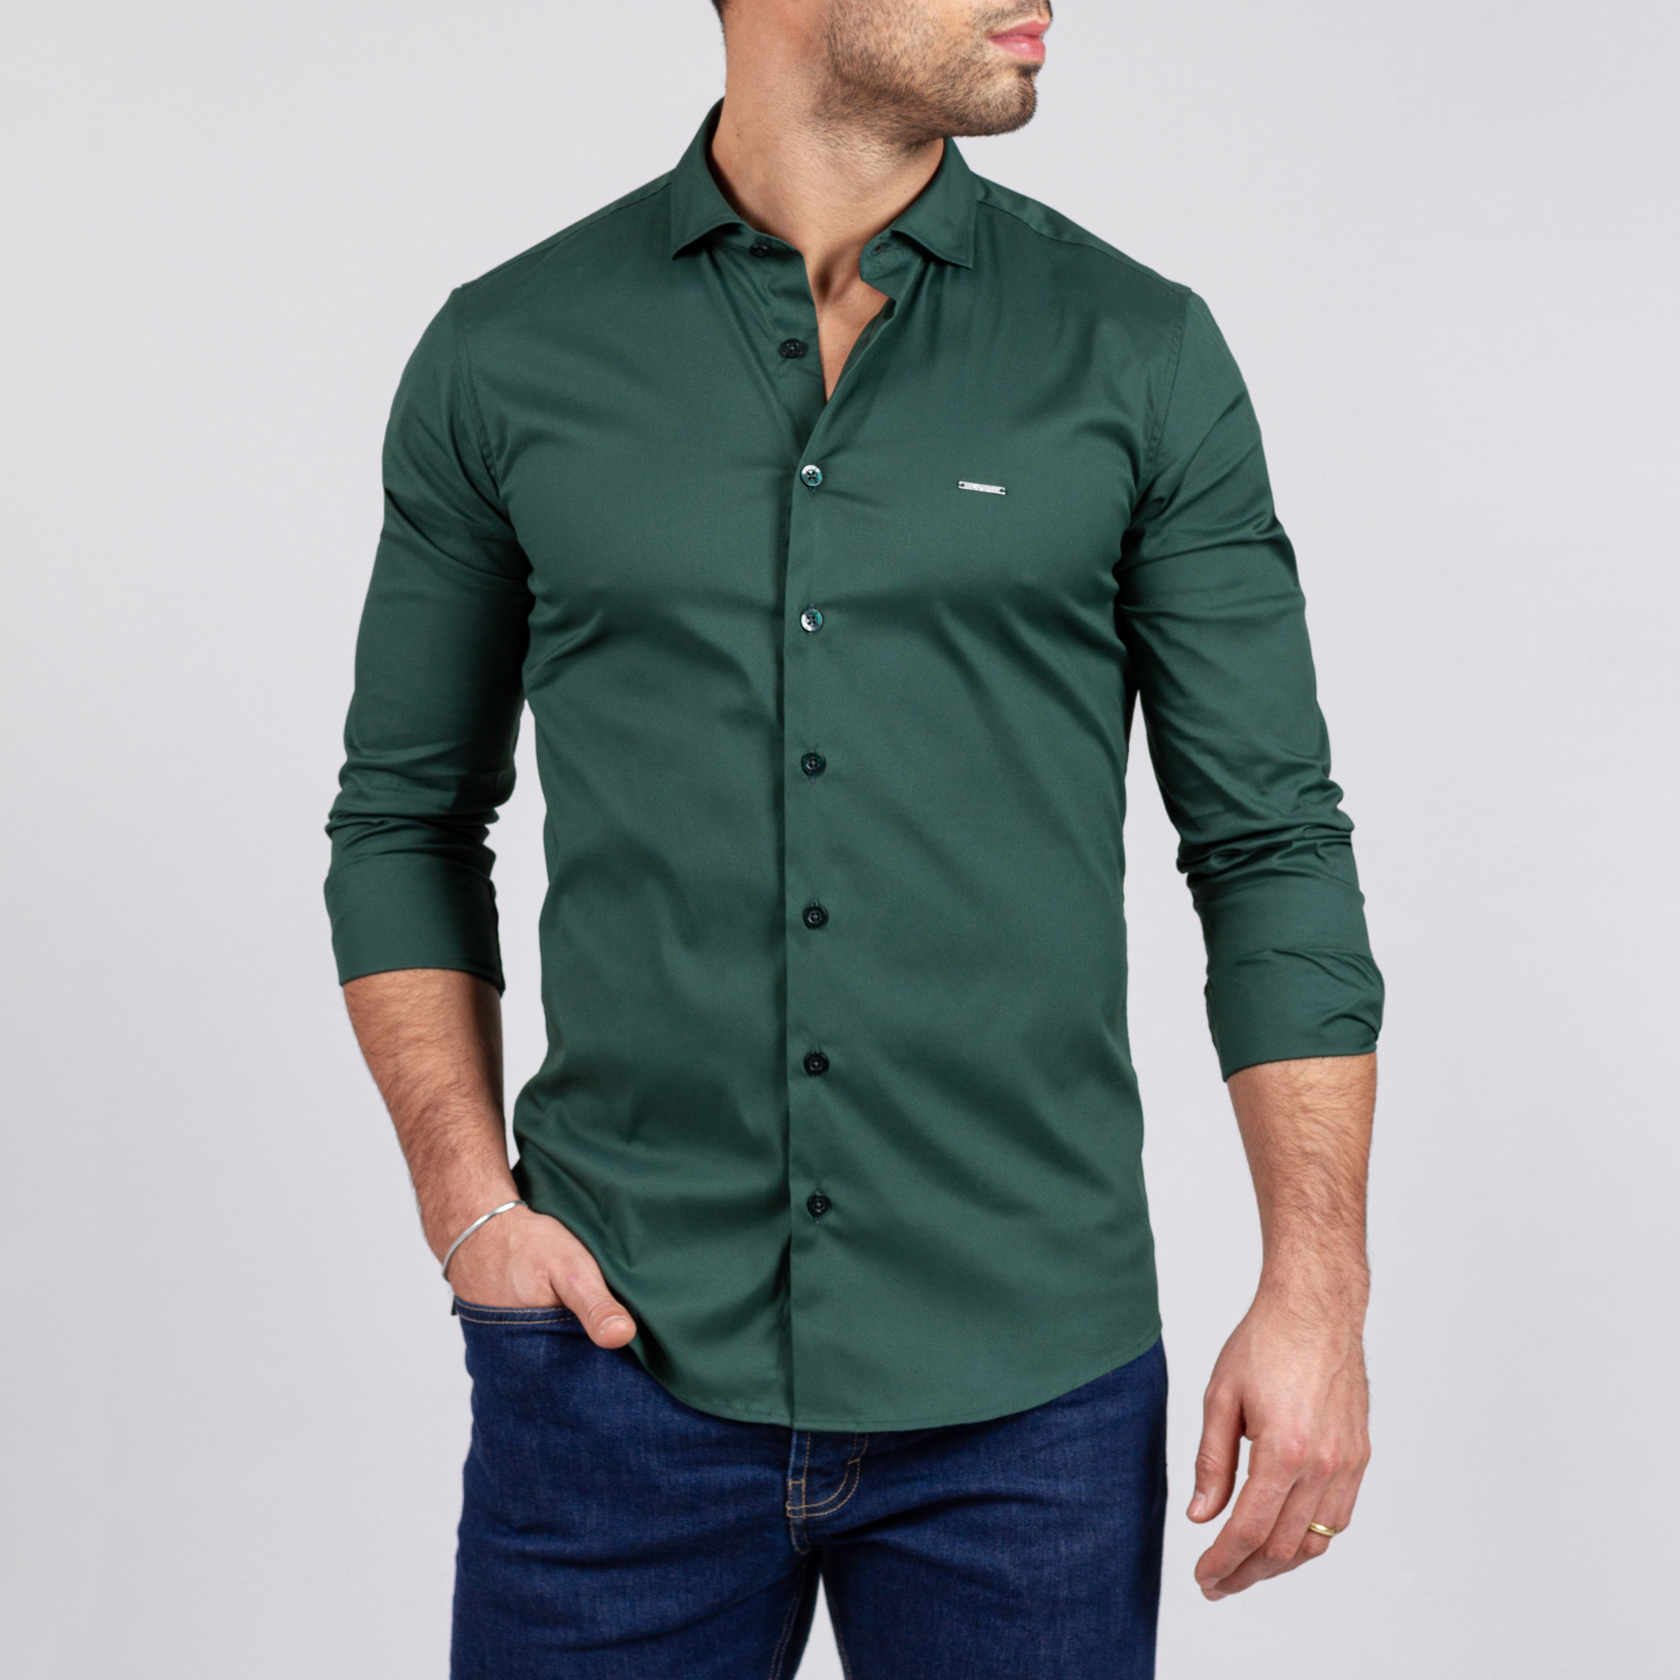 Camisa Zolf Gola Italiana Verde Royal Slim Fit - Man Inc Fashion